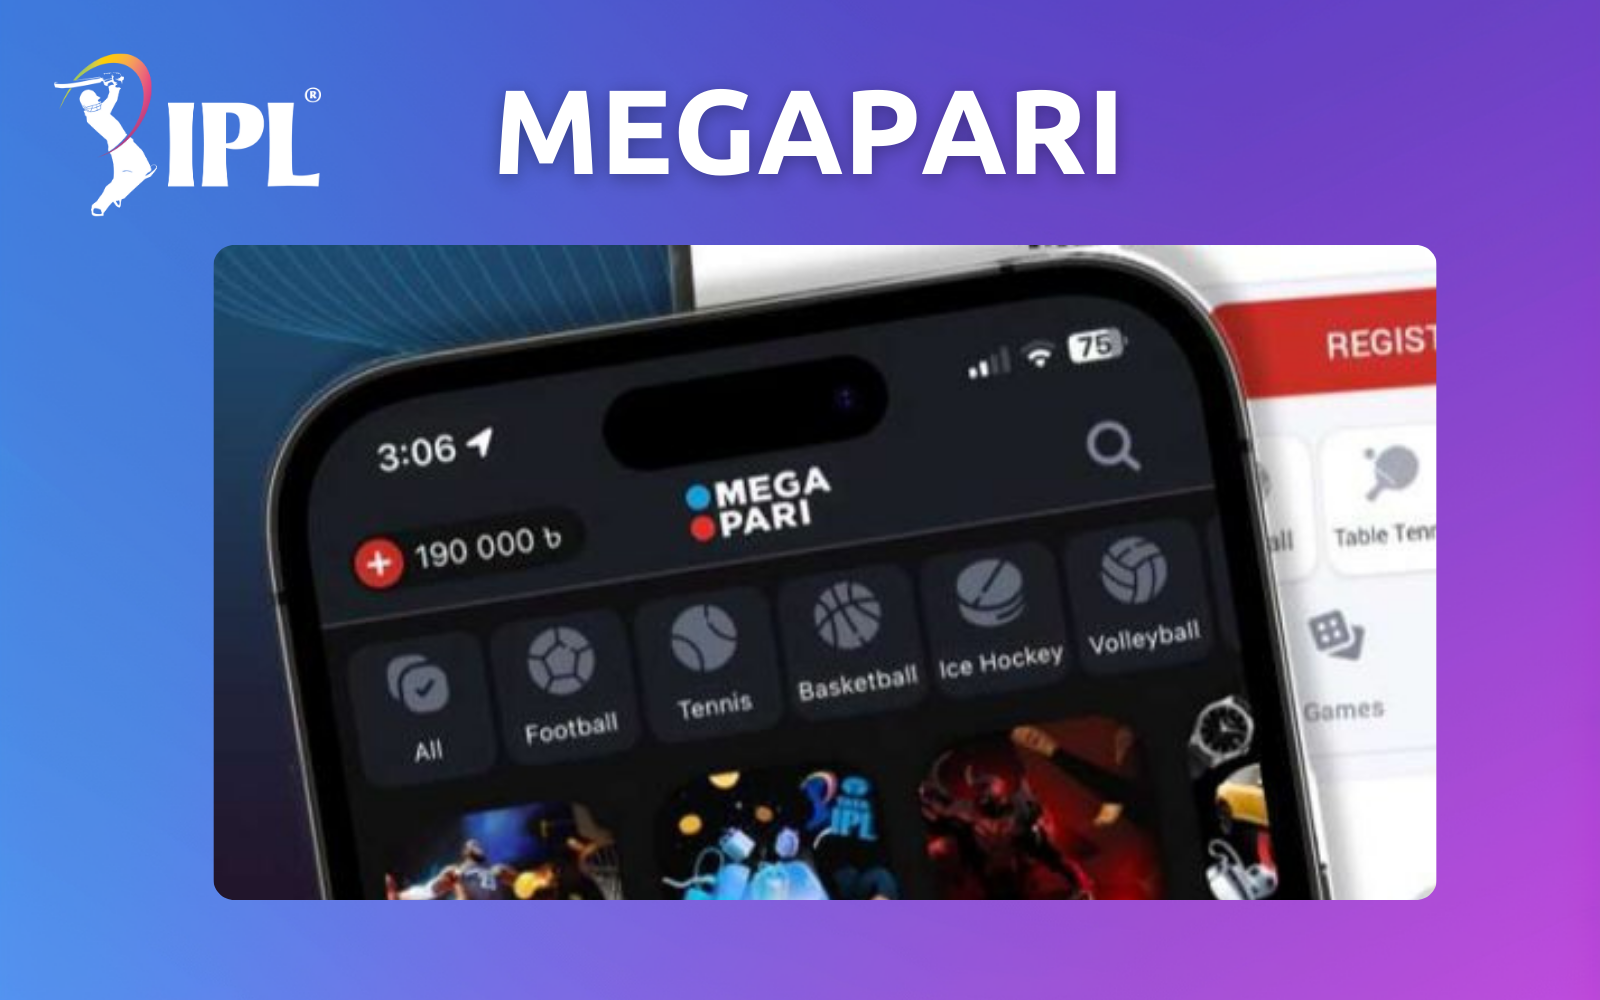 Megapari: An Overview